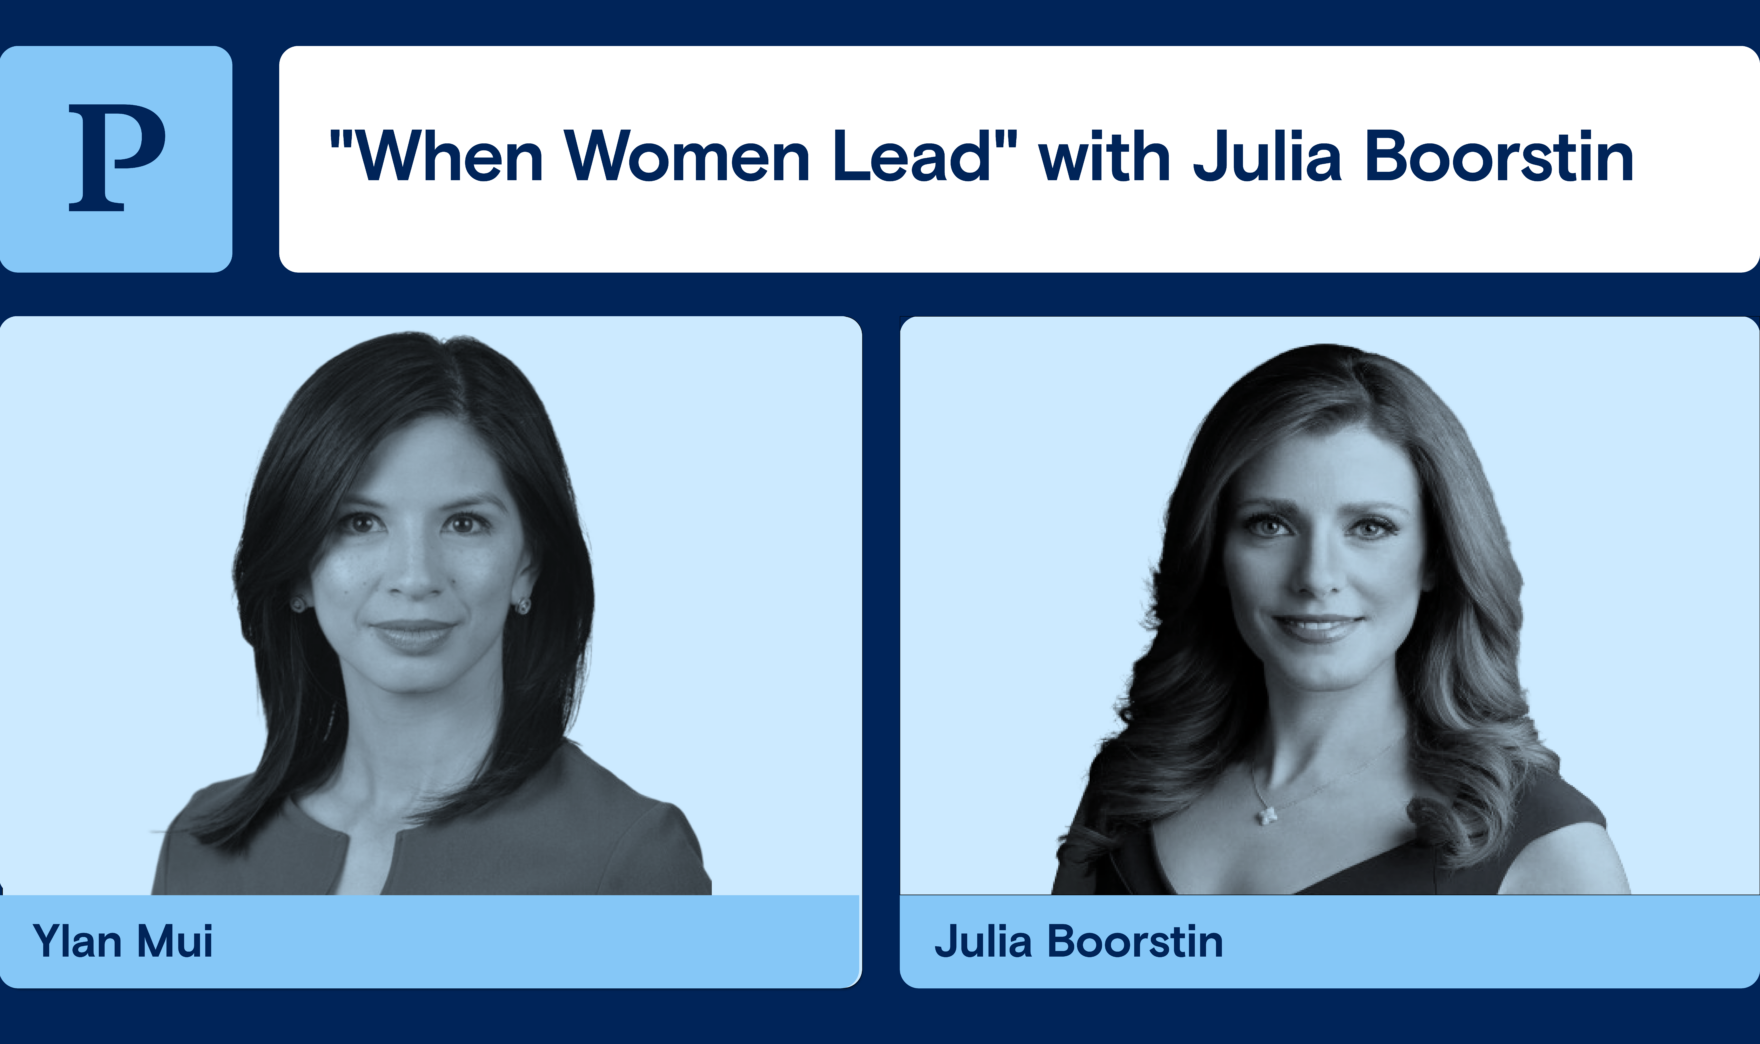 “When Women Lead” with Julia Boorstin